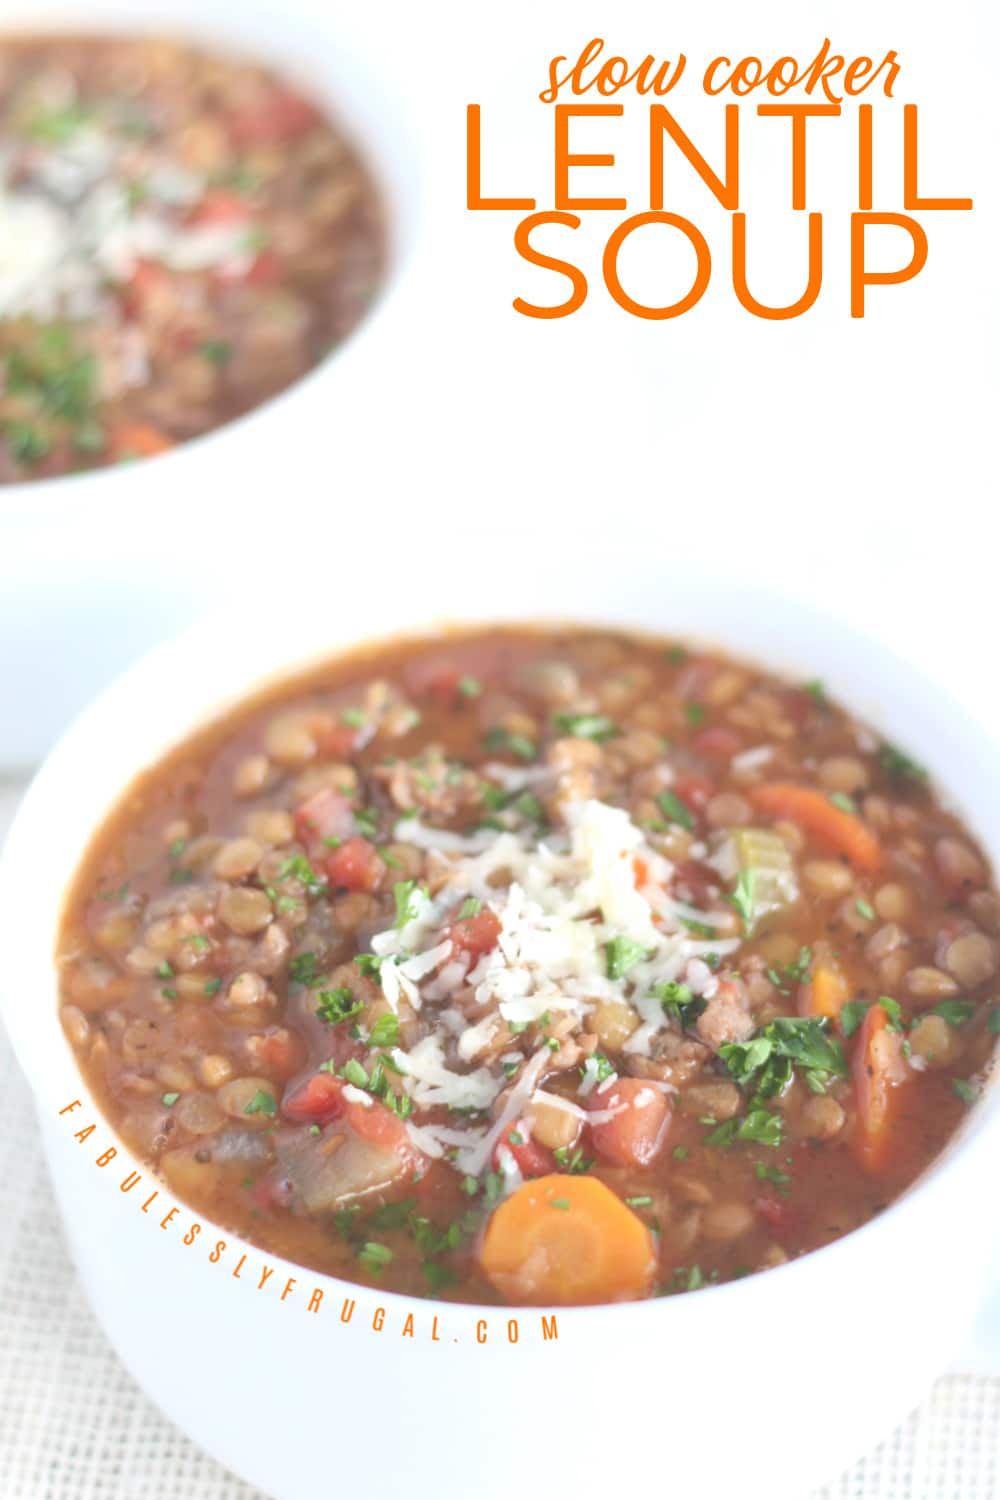 Easy crockpot lentil soup